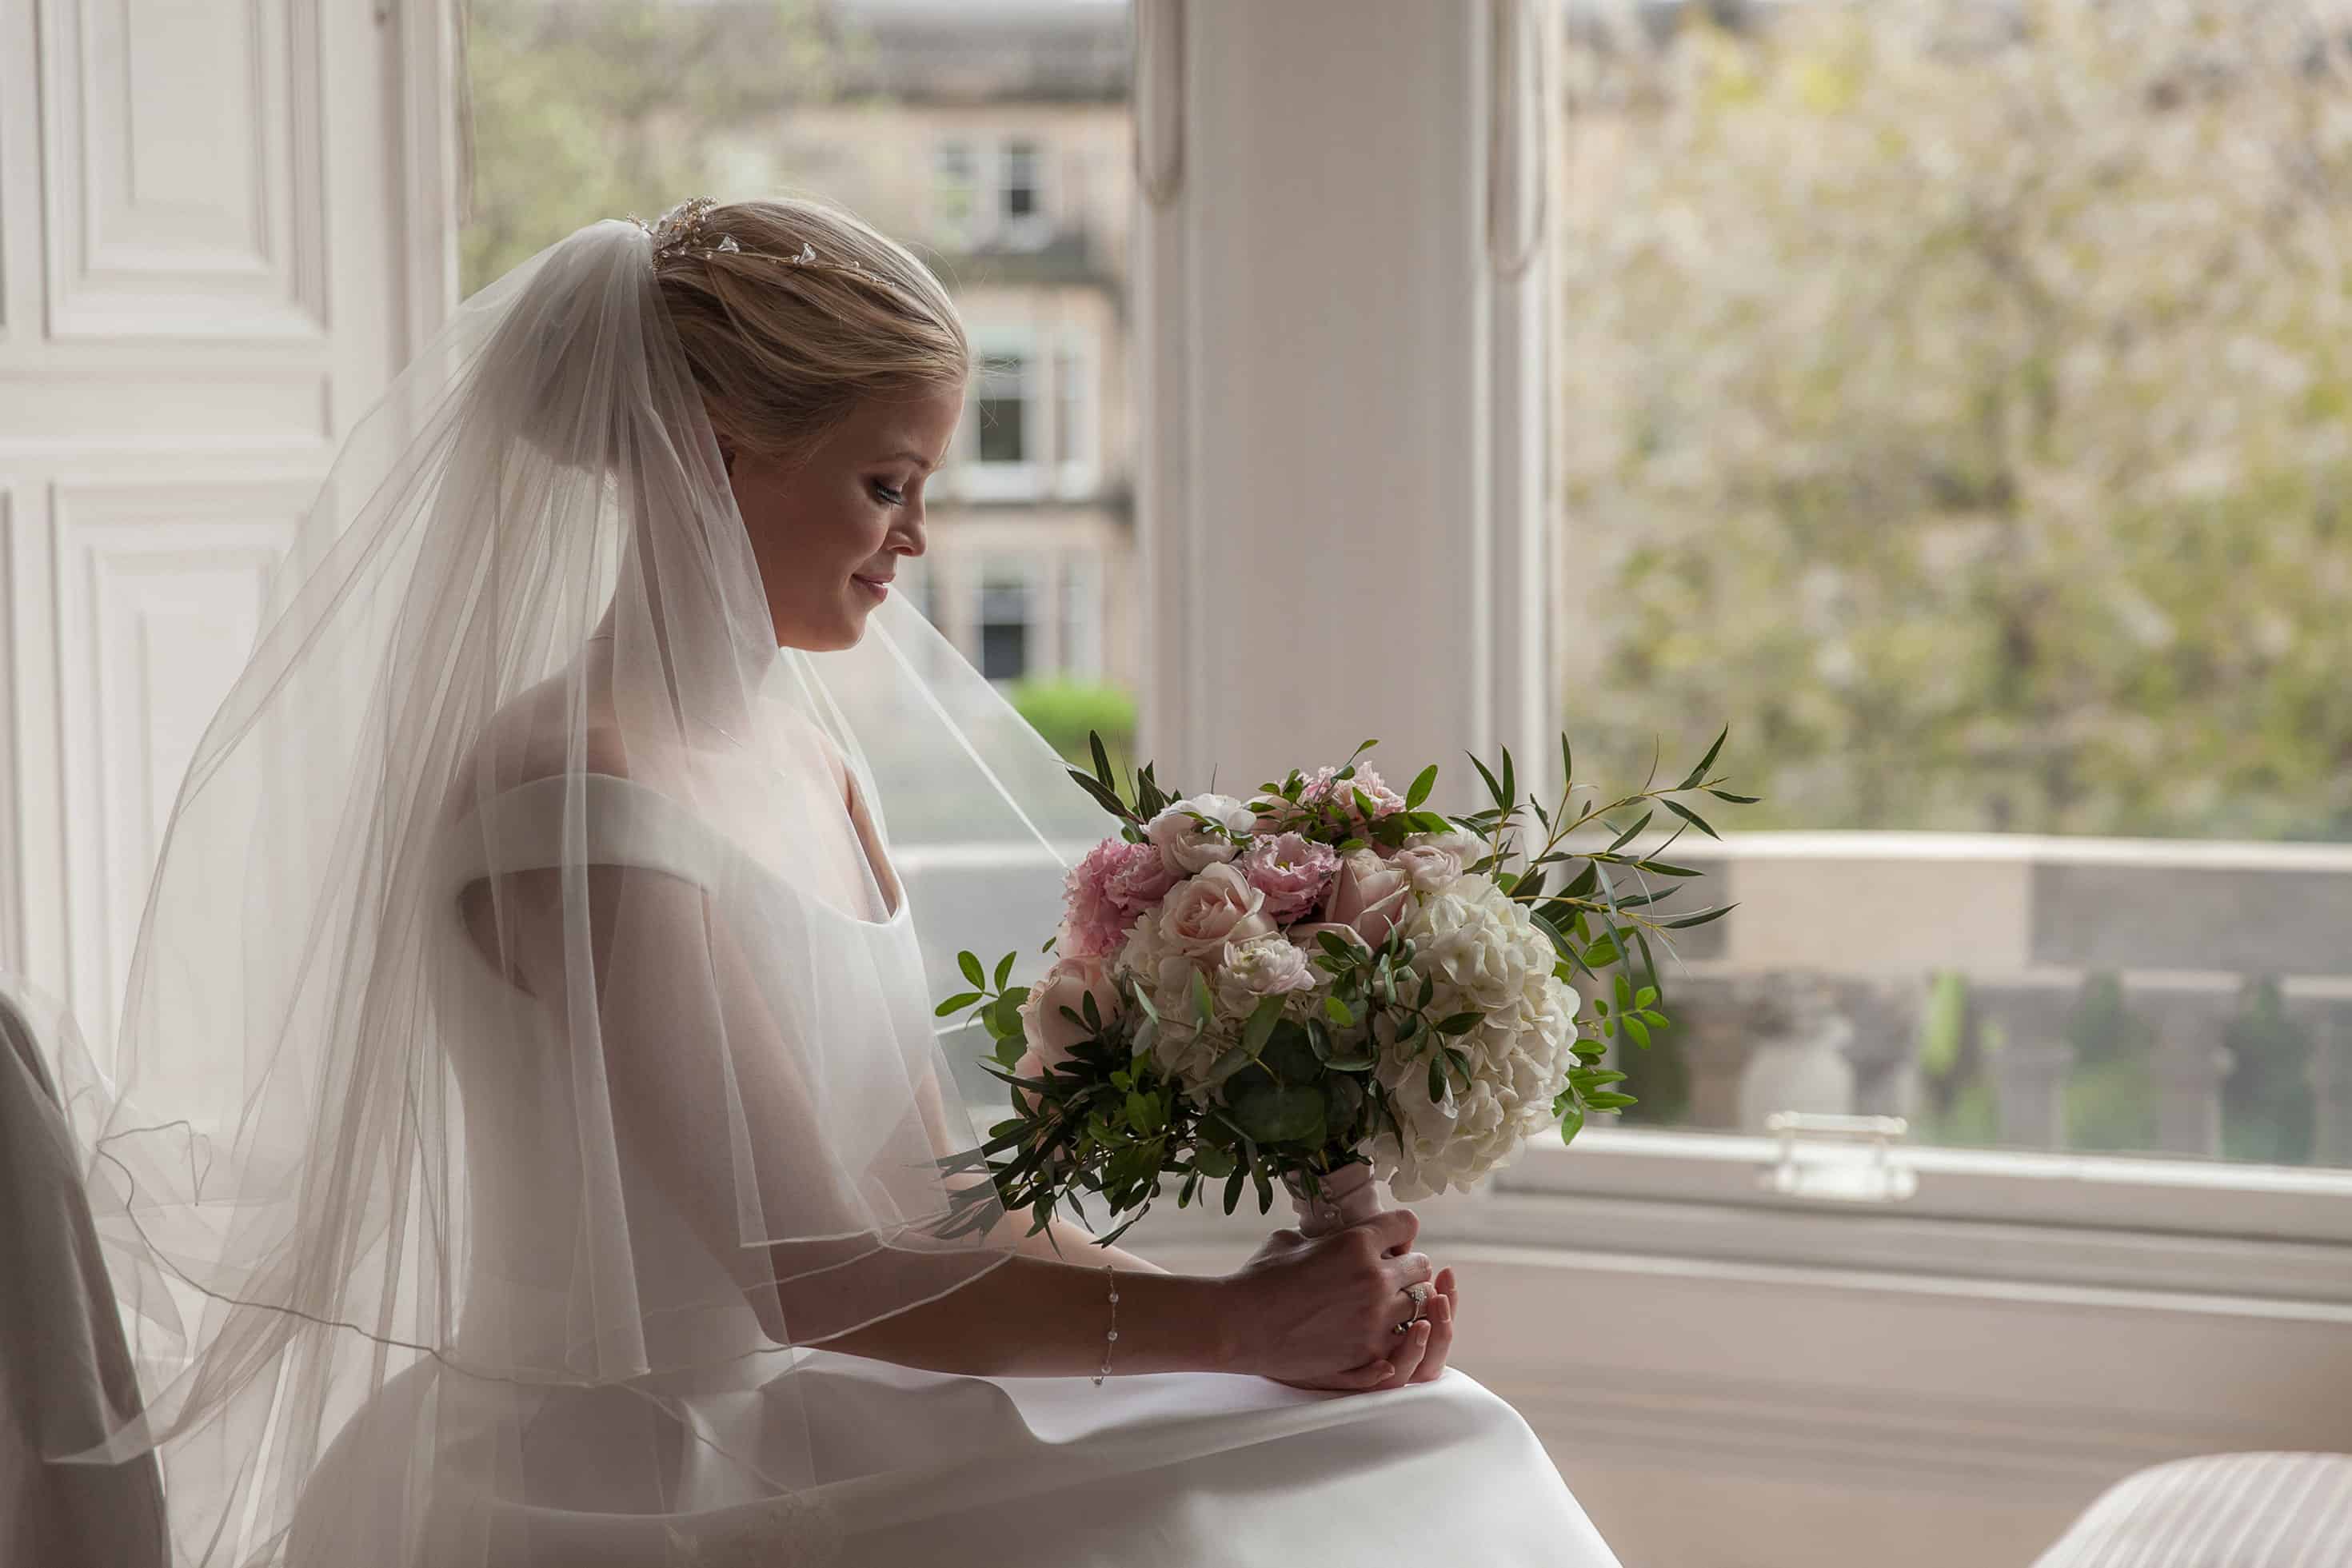 Edinburgh bride with flowers